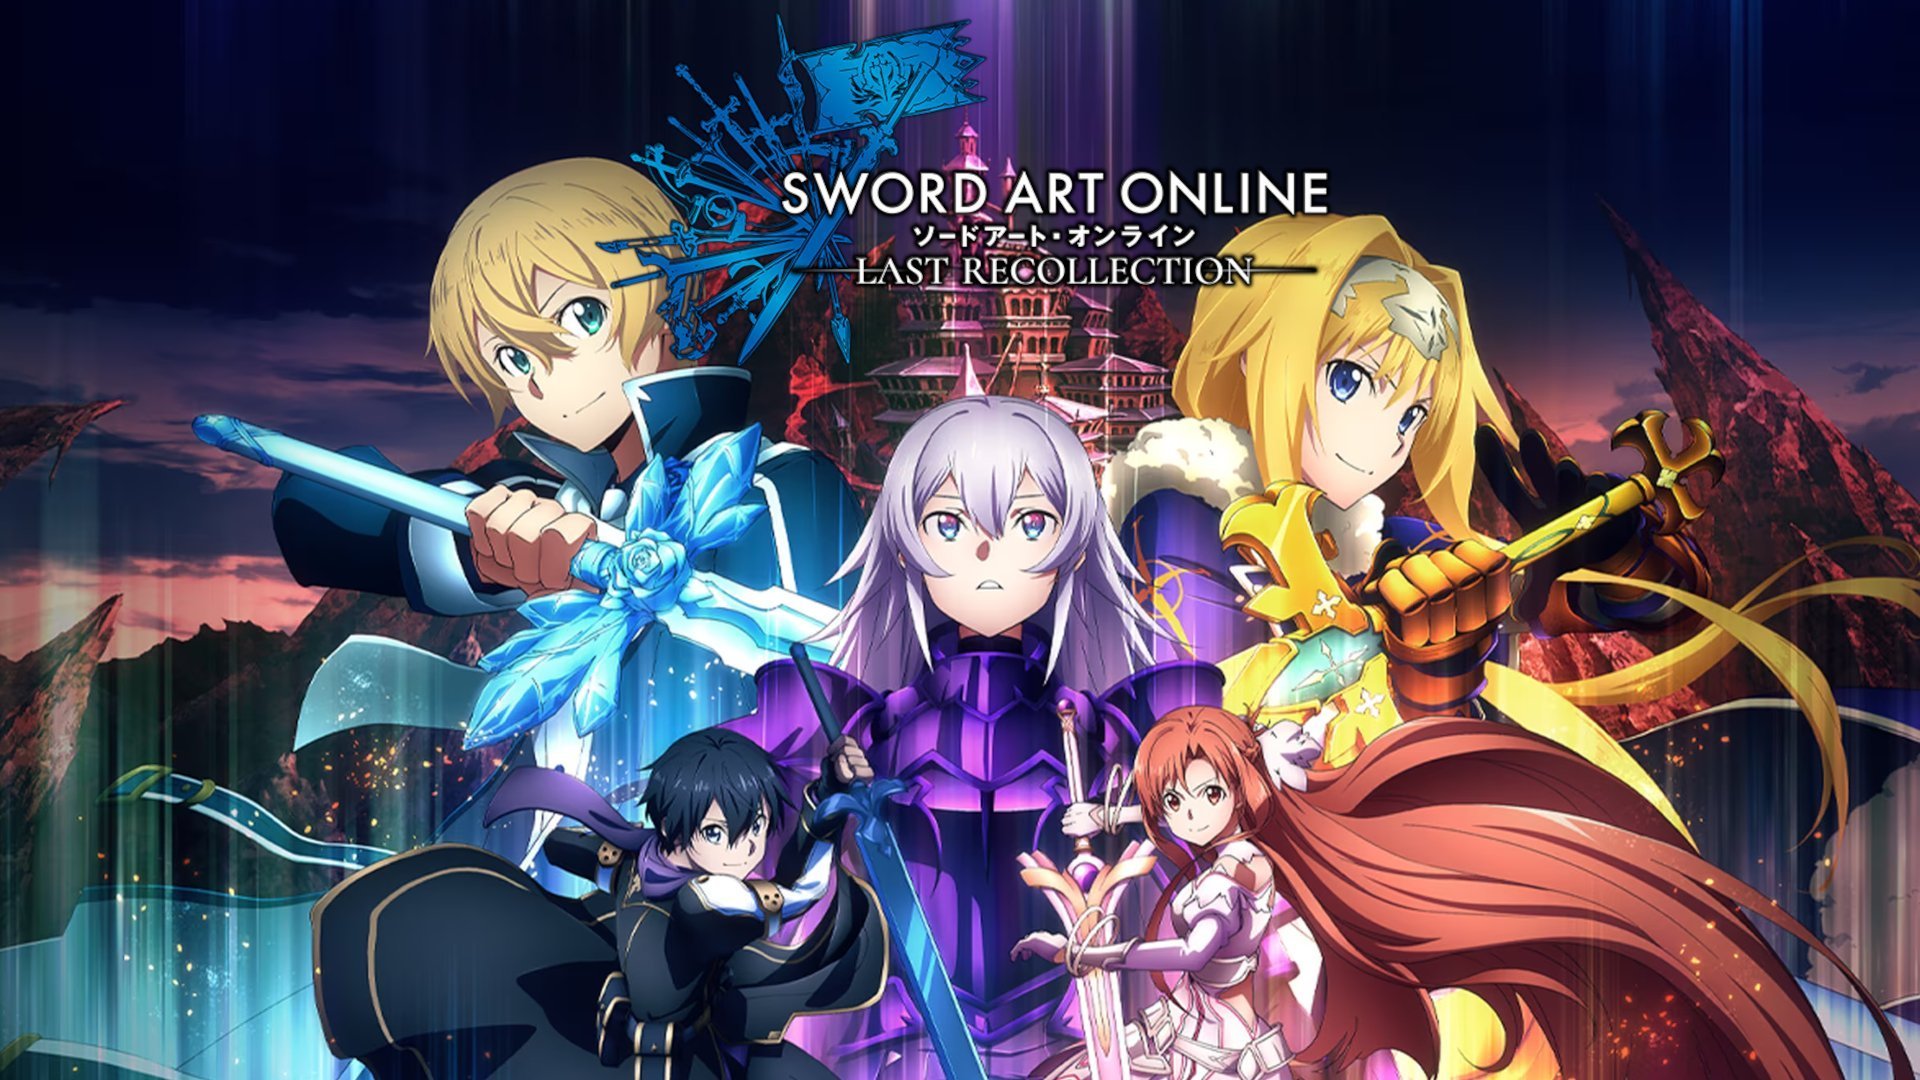 SWORD ART ONLINE: LAST RECOLLECTION Gameplay Trailer Highlights